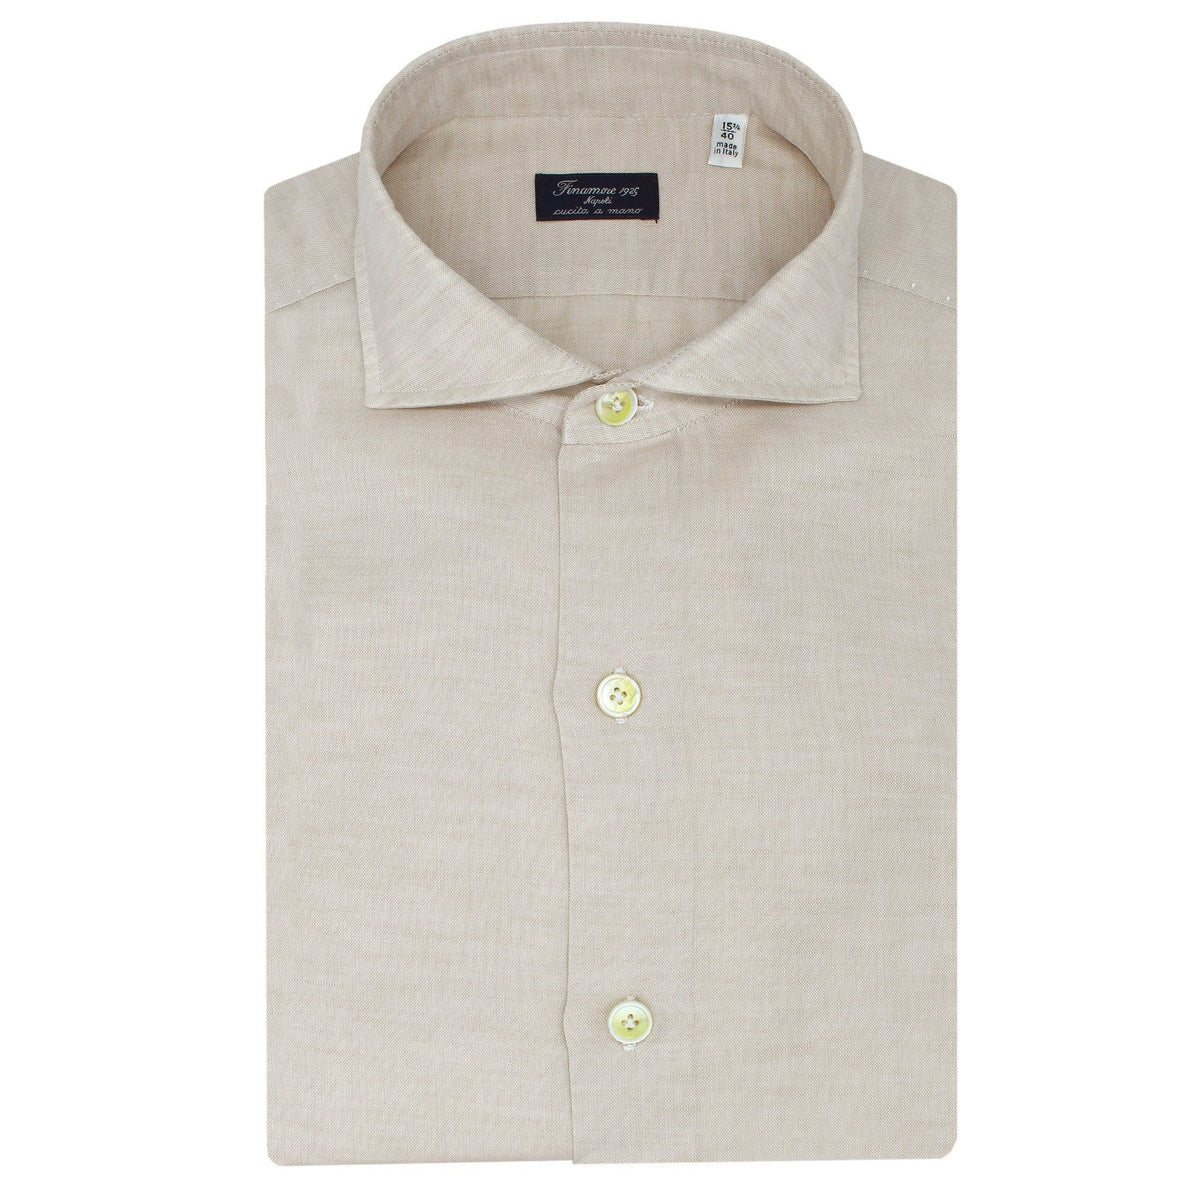 Classic regular Napoli shirt cotton and linen fabric Carlo Riva